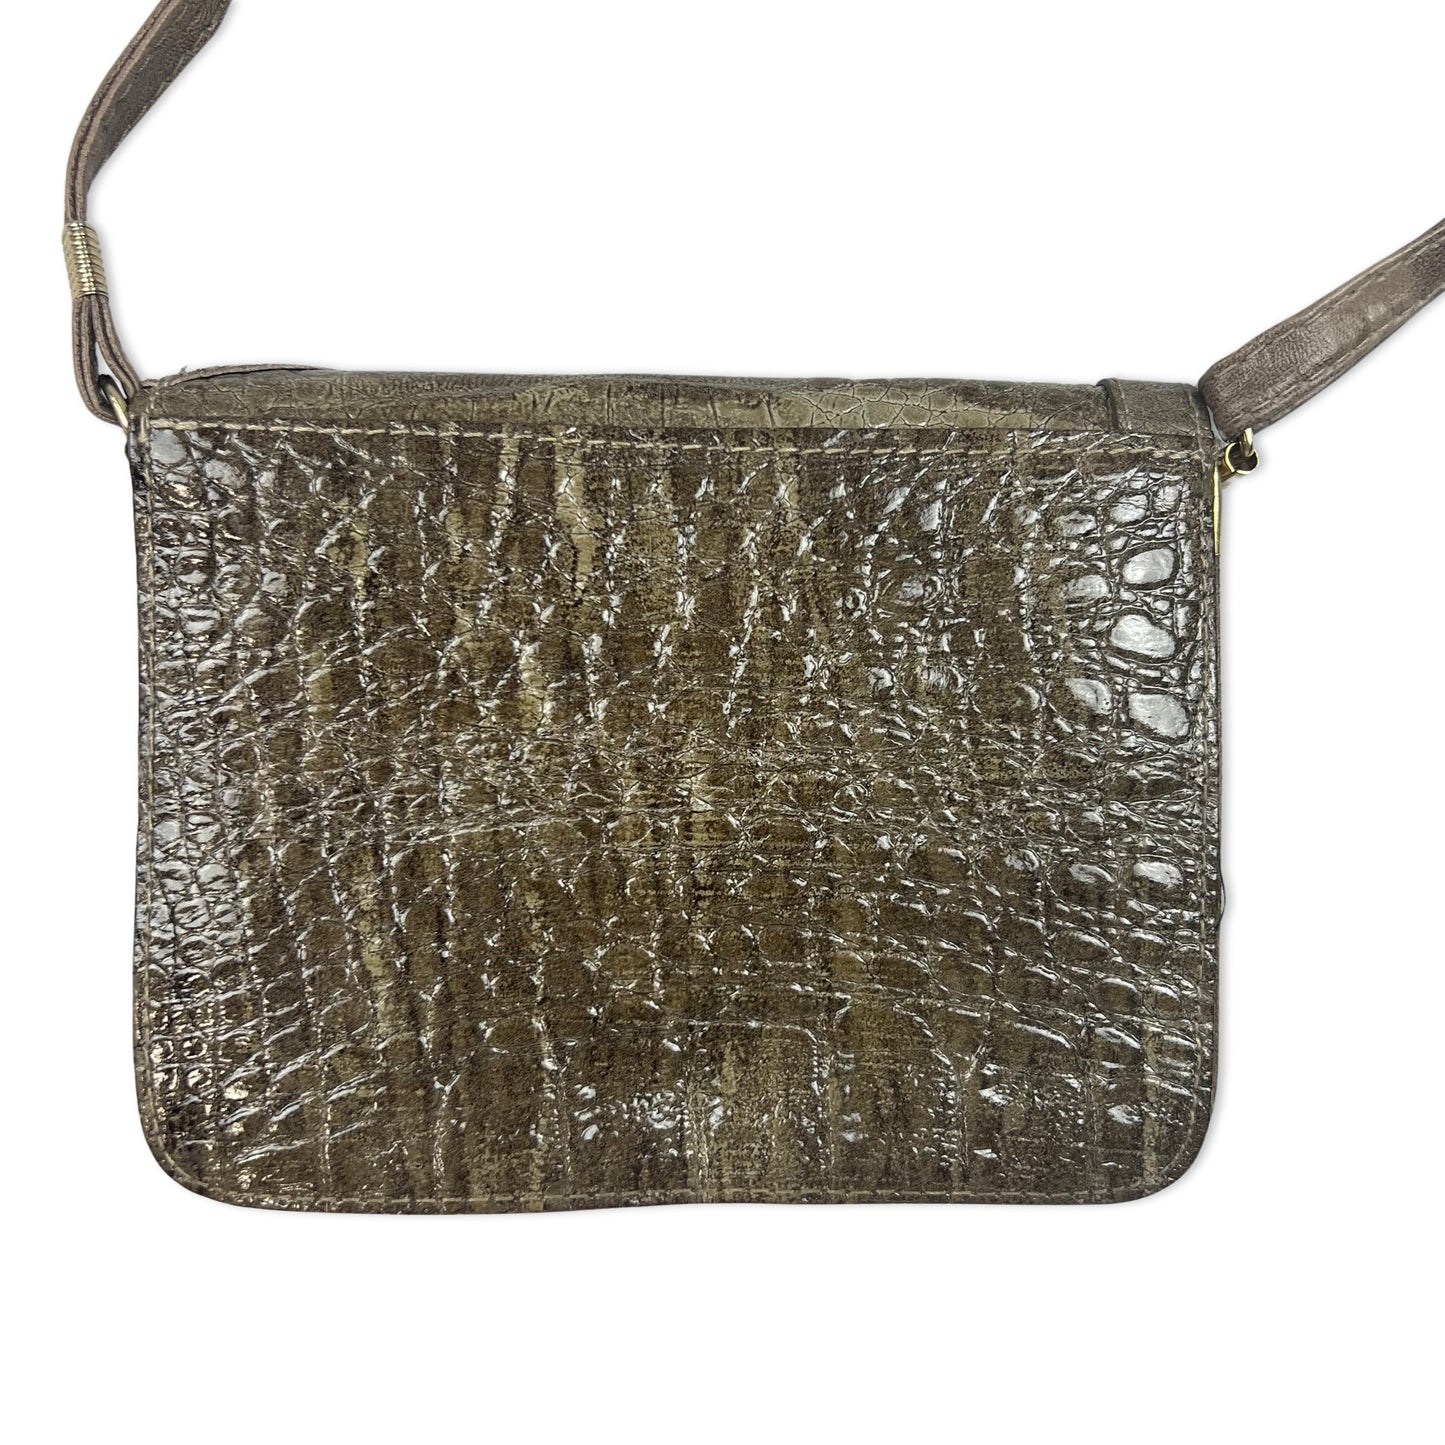 Vintage Green Croc Crocodile Small Crossbody Handbag